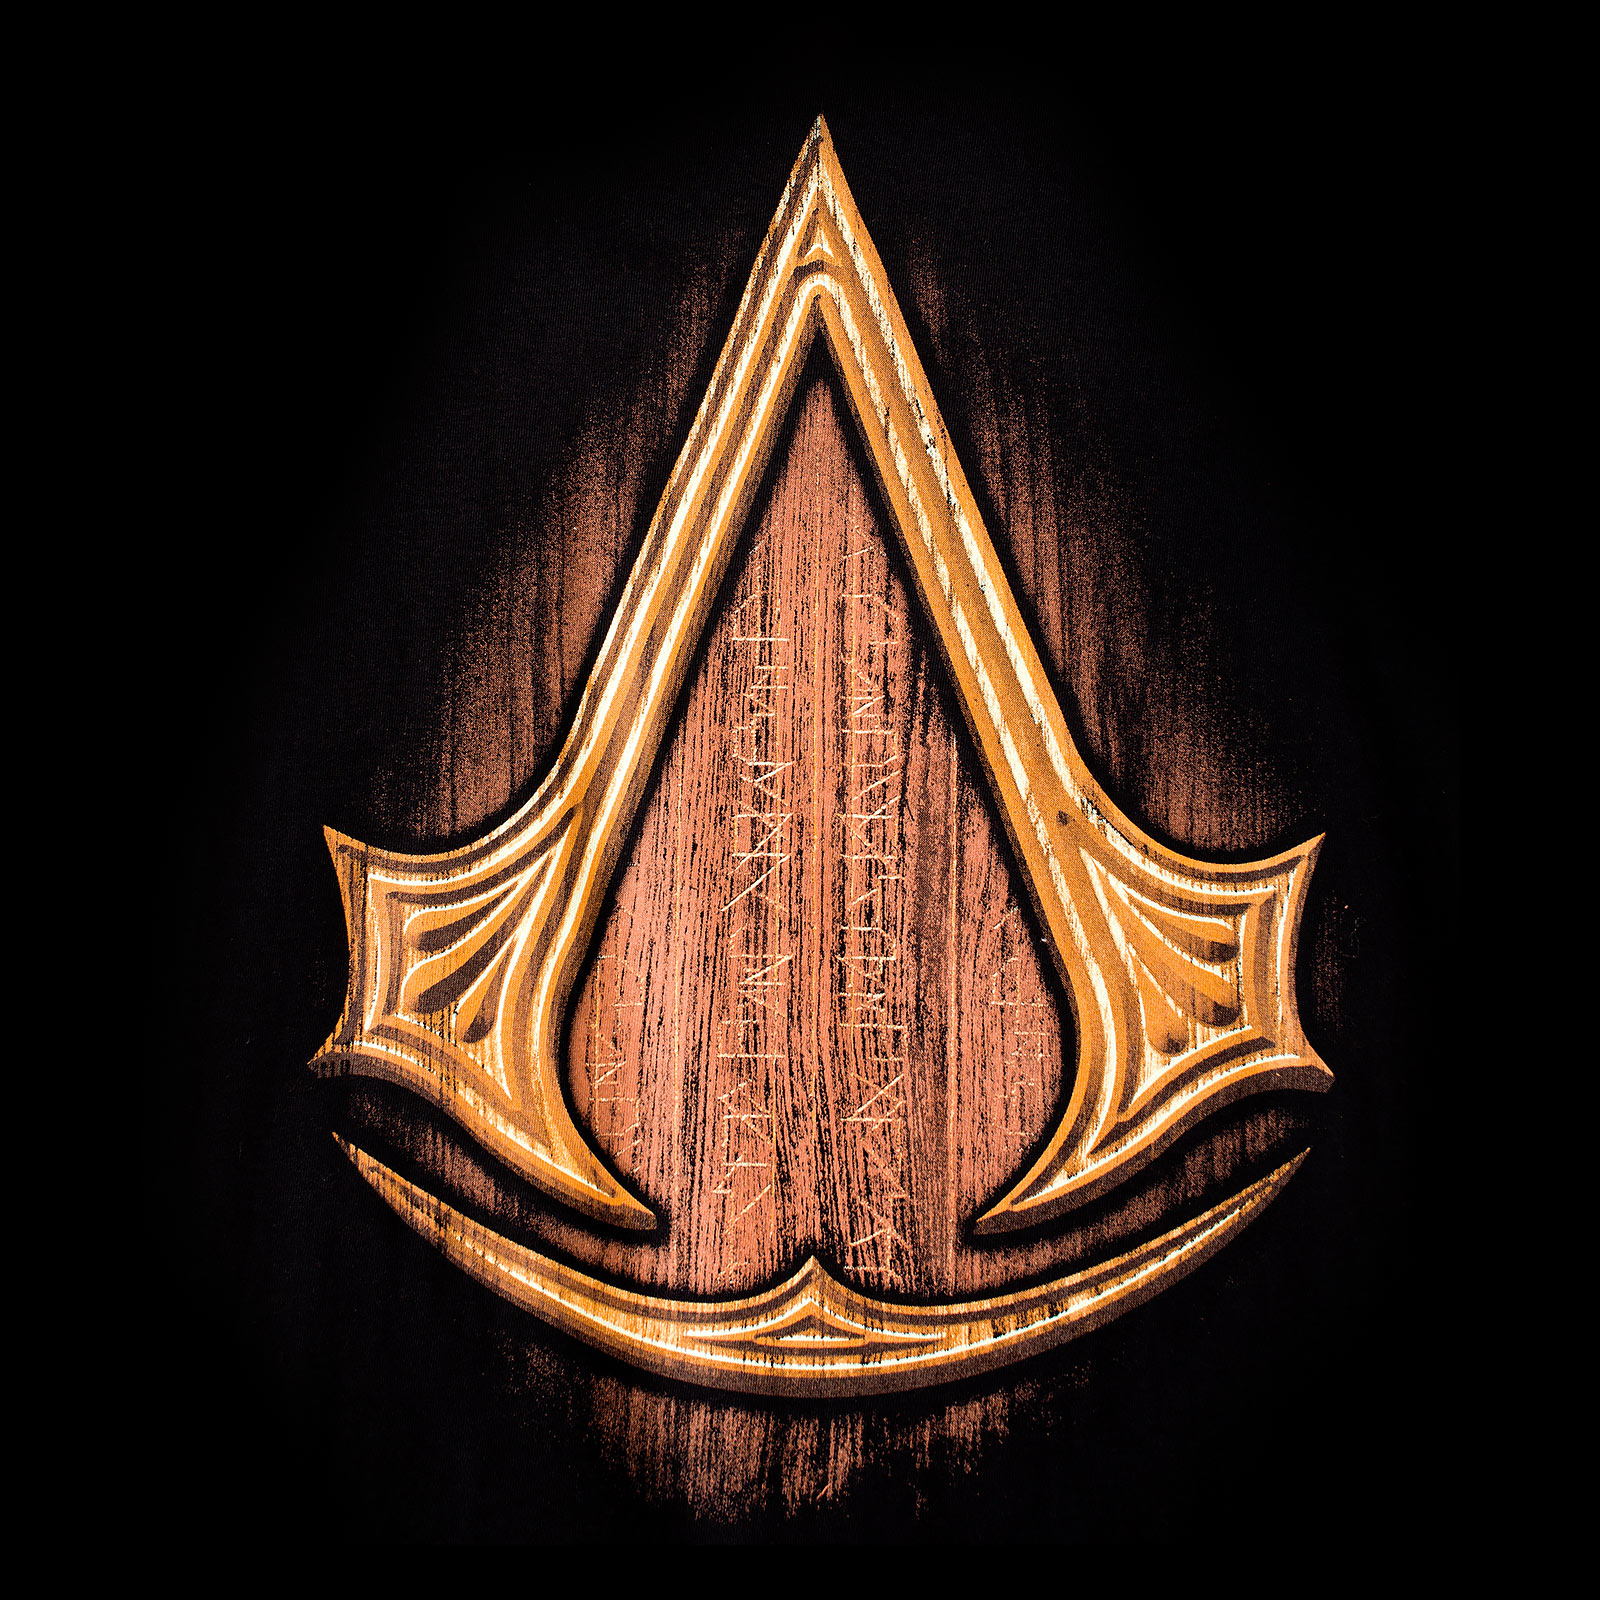 Assassins Creed - Insignia Wood T-Shirt black